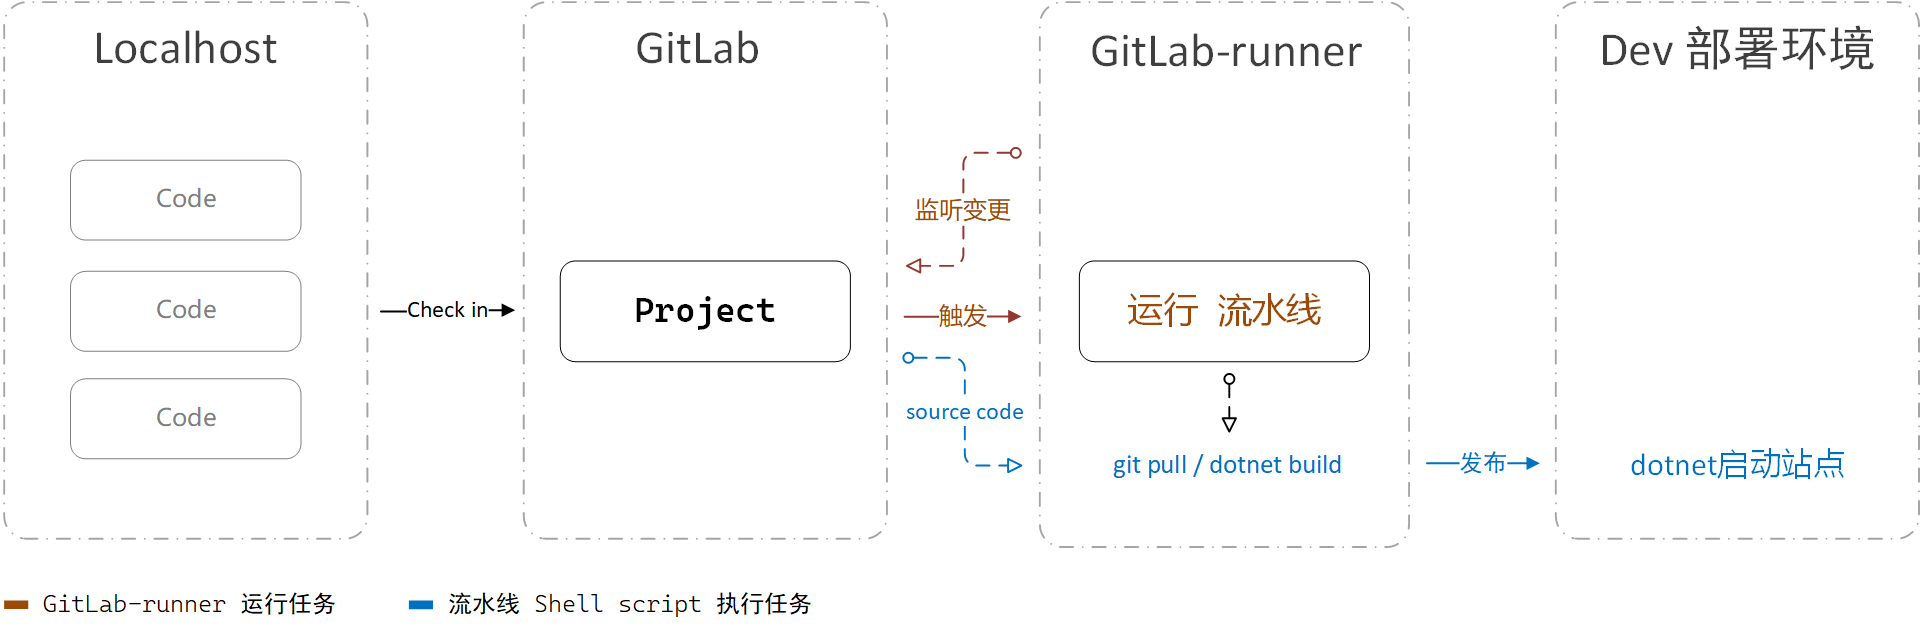 GitLab私有化部署 – CI/CD – 持续集成/交付/部署 – 源码托管 & 自动部署